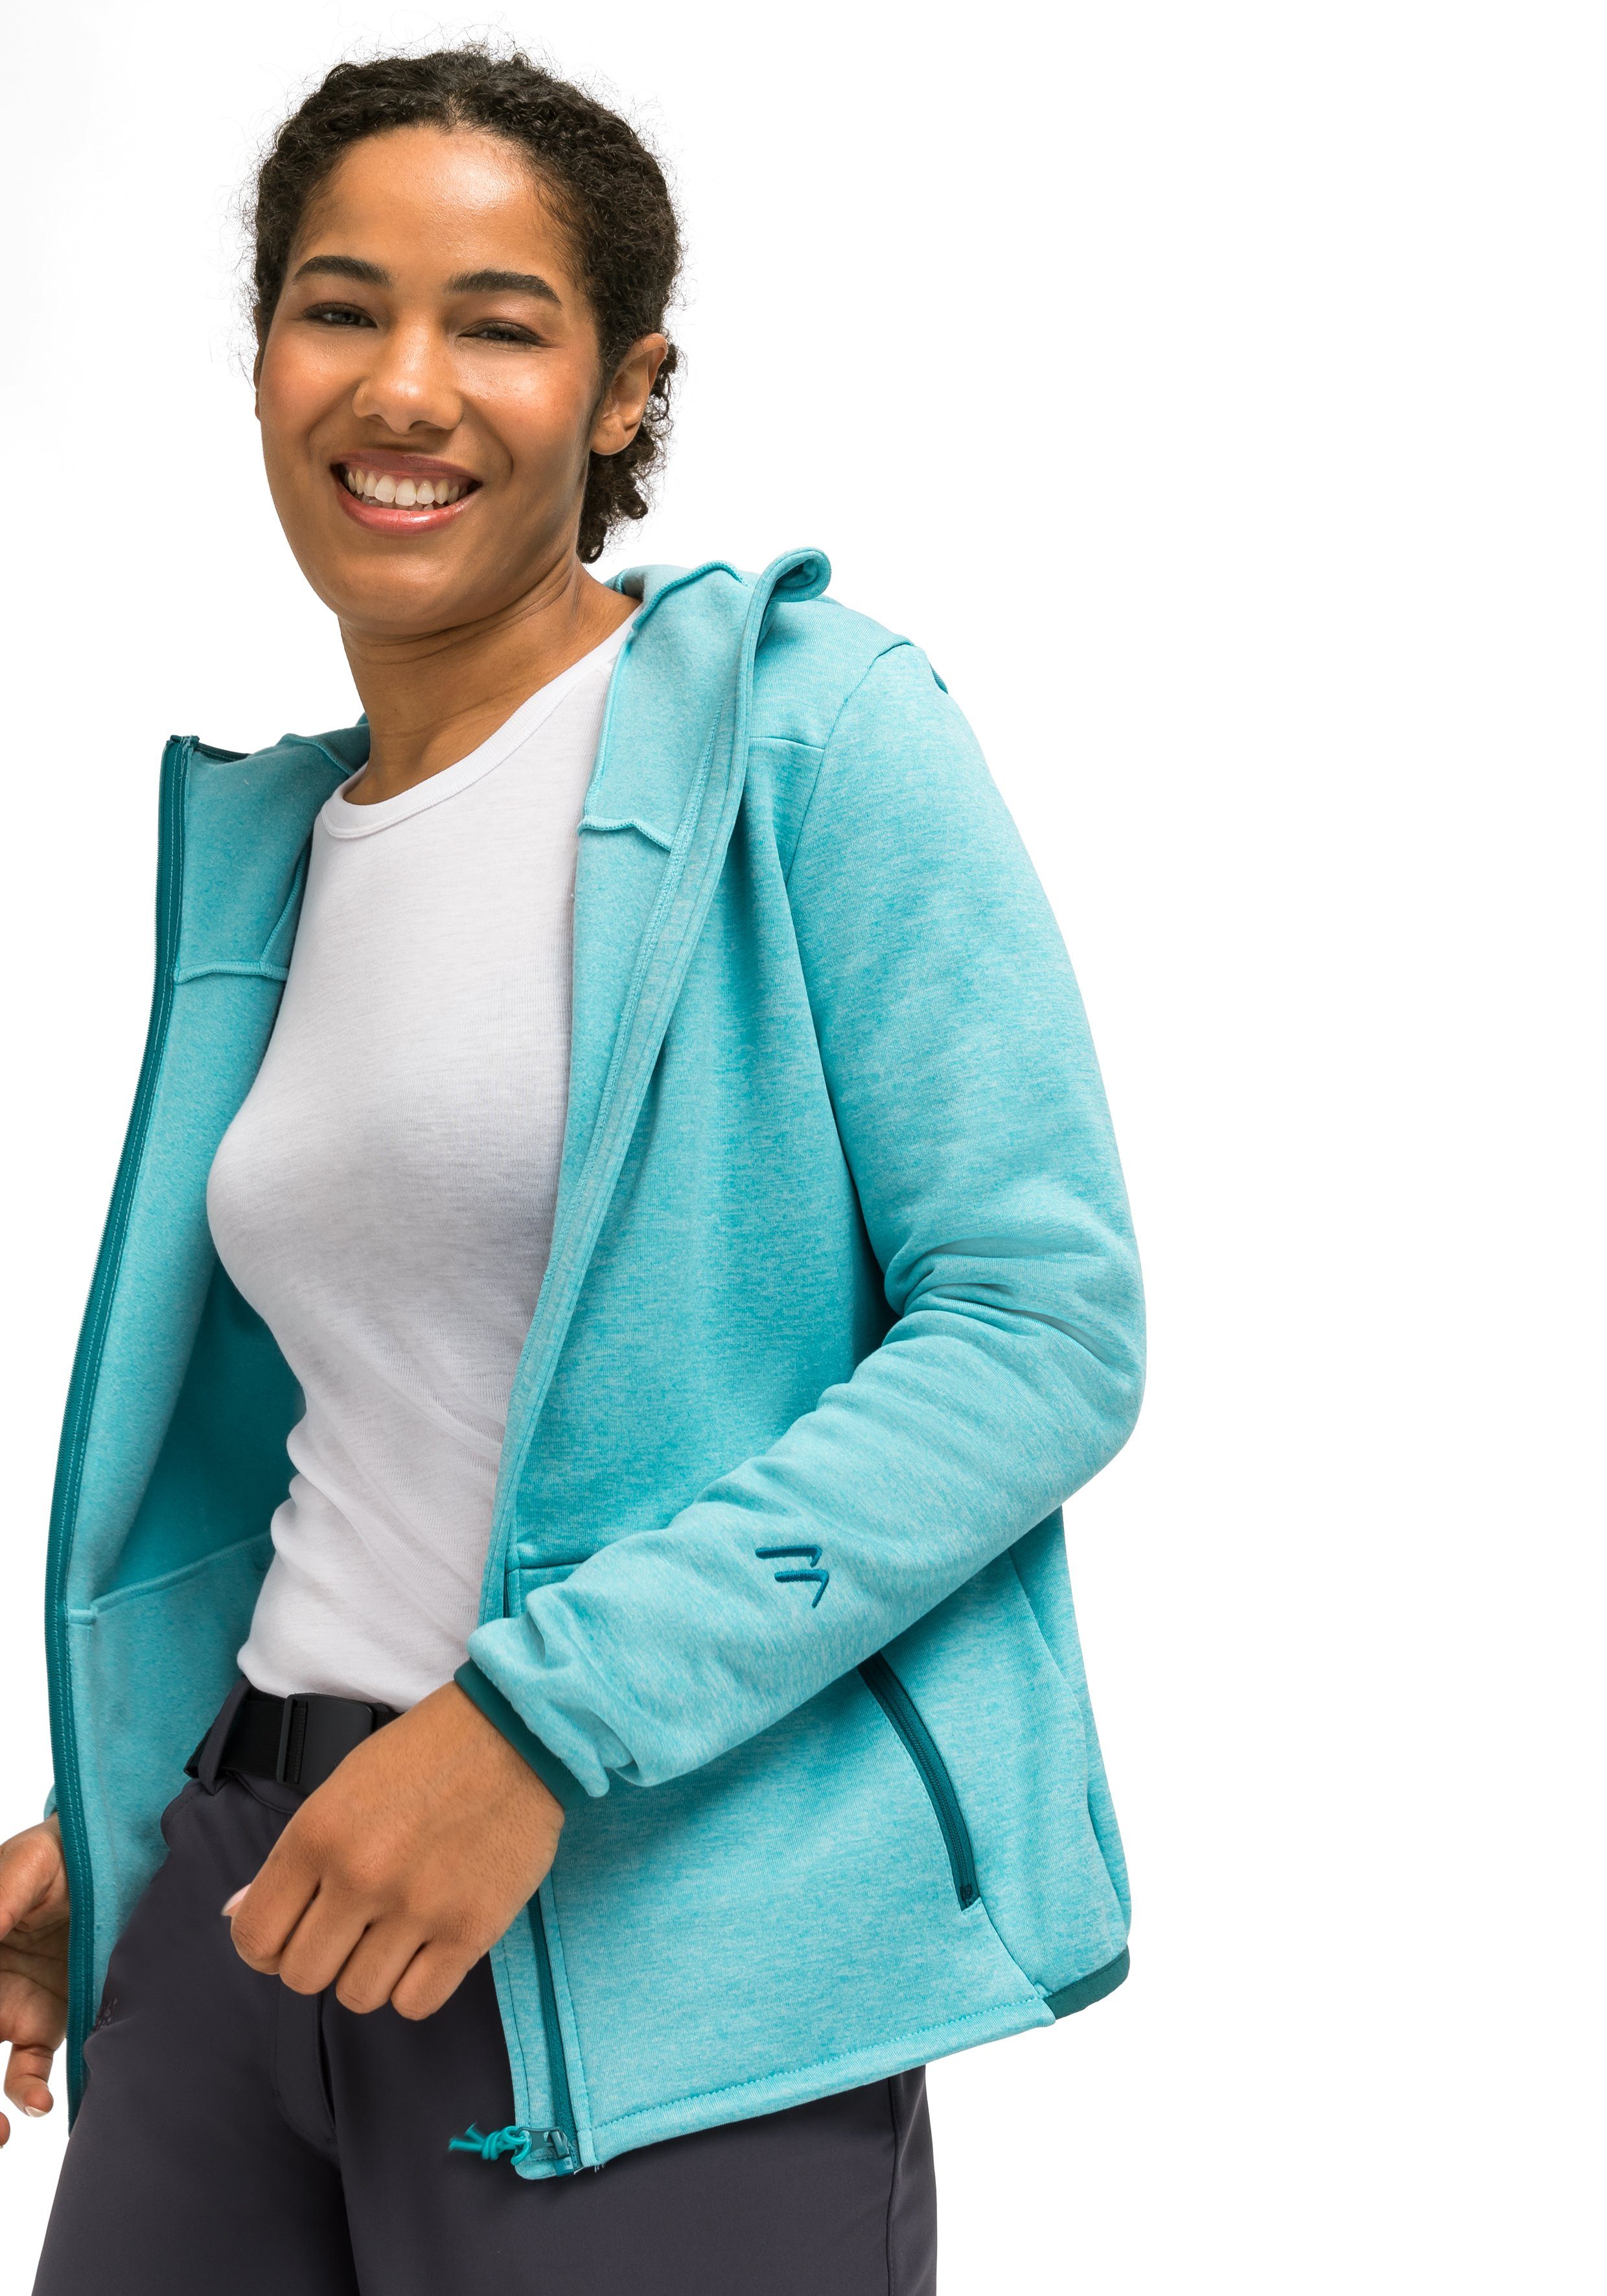 verstellbarer Zip-Hoodie Fleece mit Kapuze, aquablau Fleecejacke Damen W atmungsaktiver Maier Sports Fave